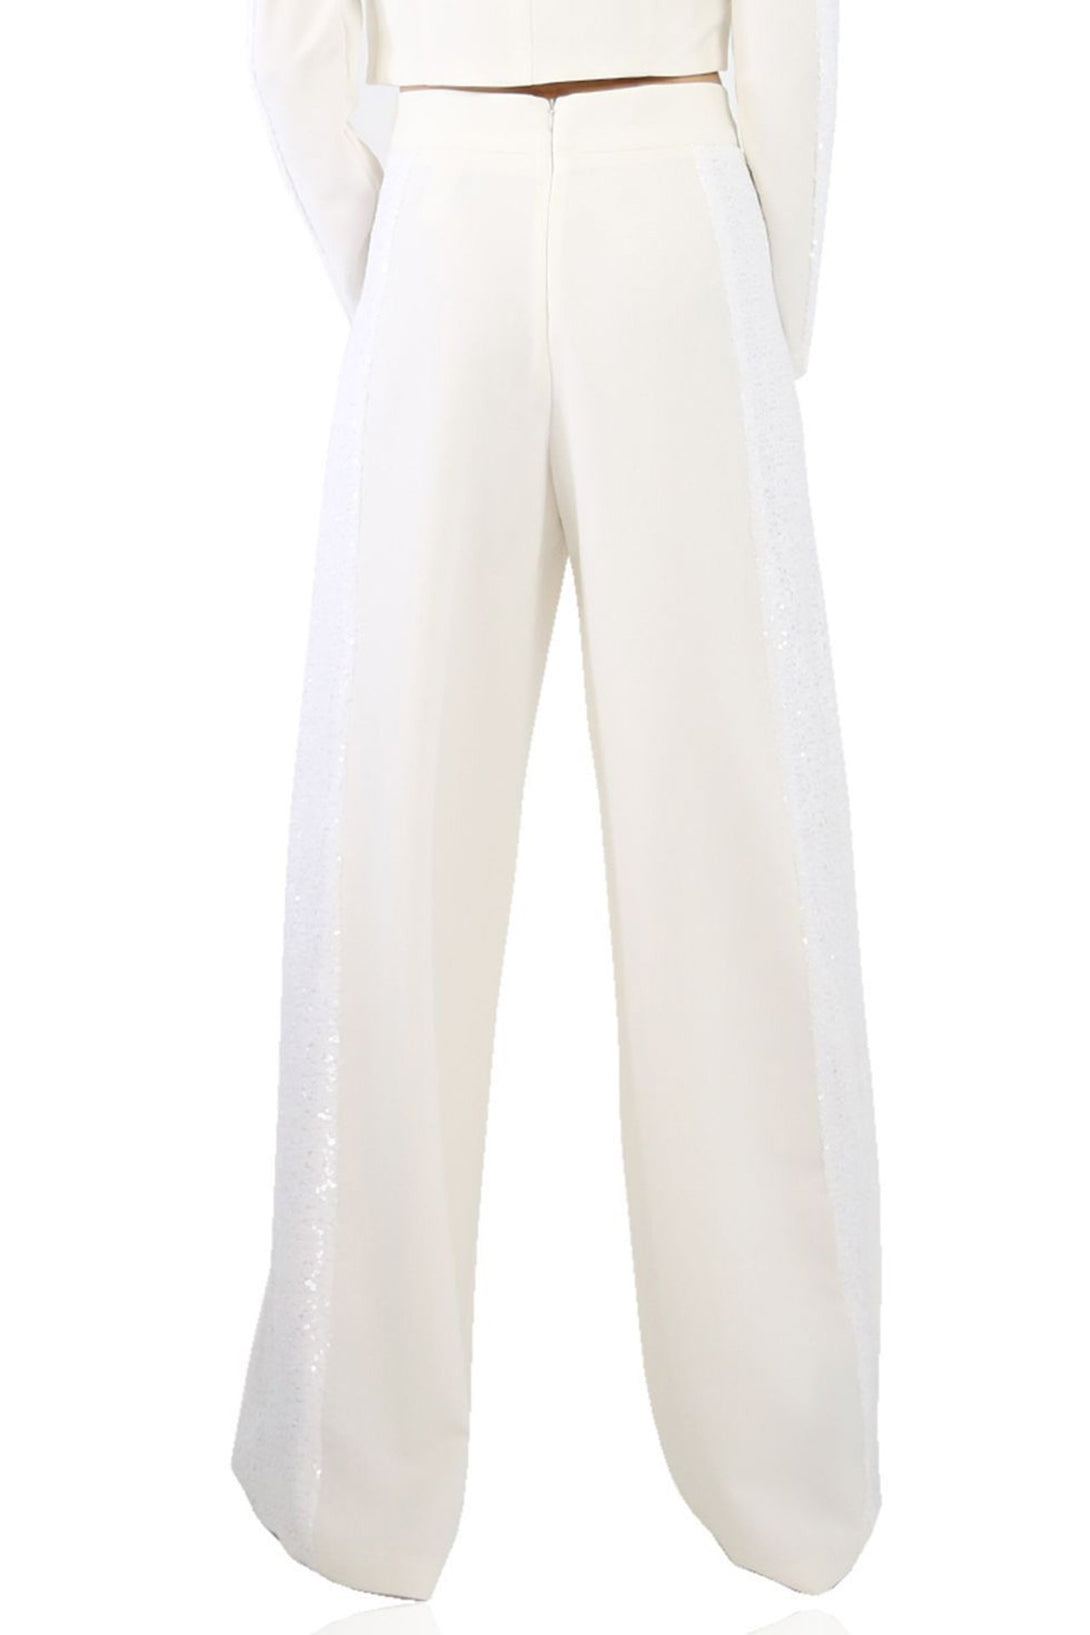 Satin-Silk-White-Pants-For-Women